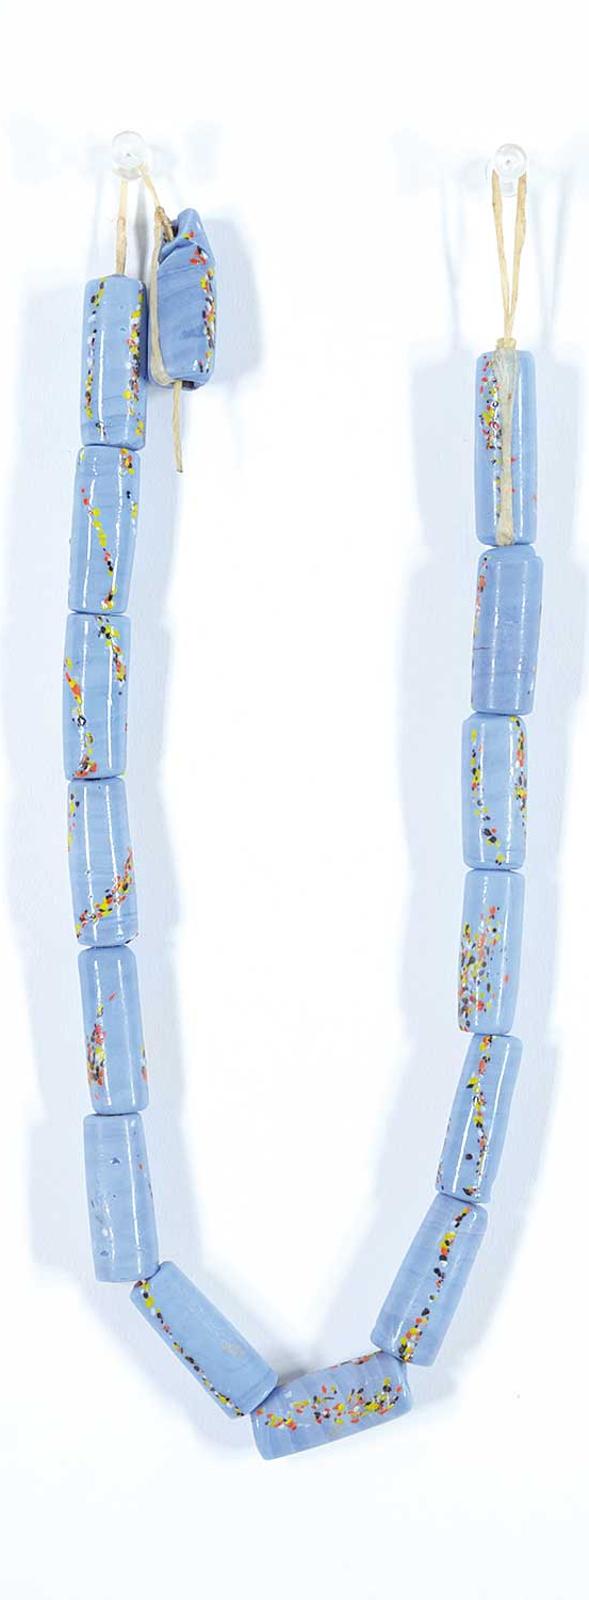 First Nations Basket School - Light Blue Strand of Glass Beads